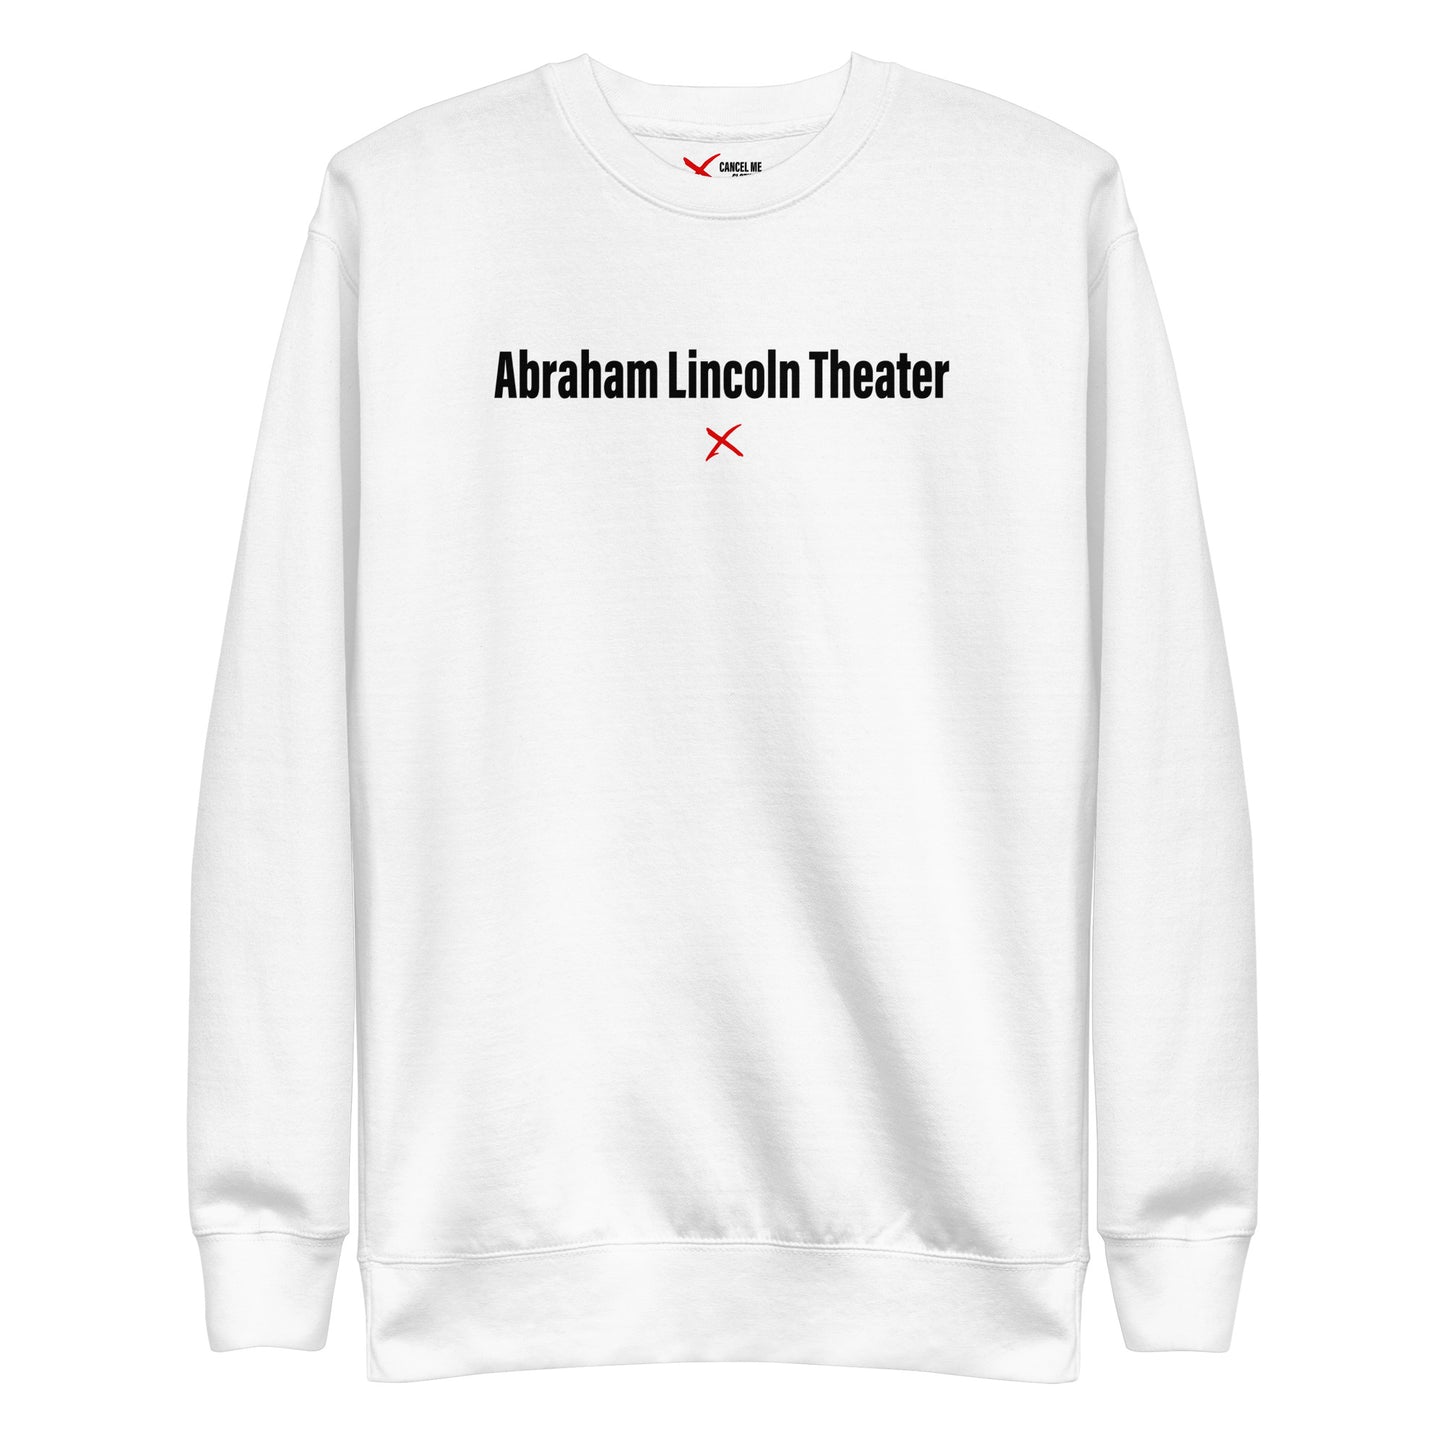 Abraham Lincoln Theater - Sweatshirt